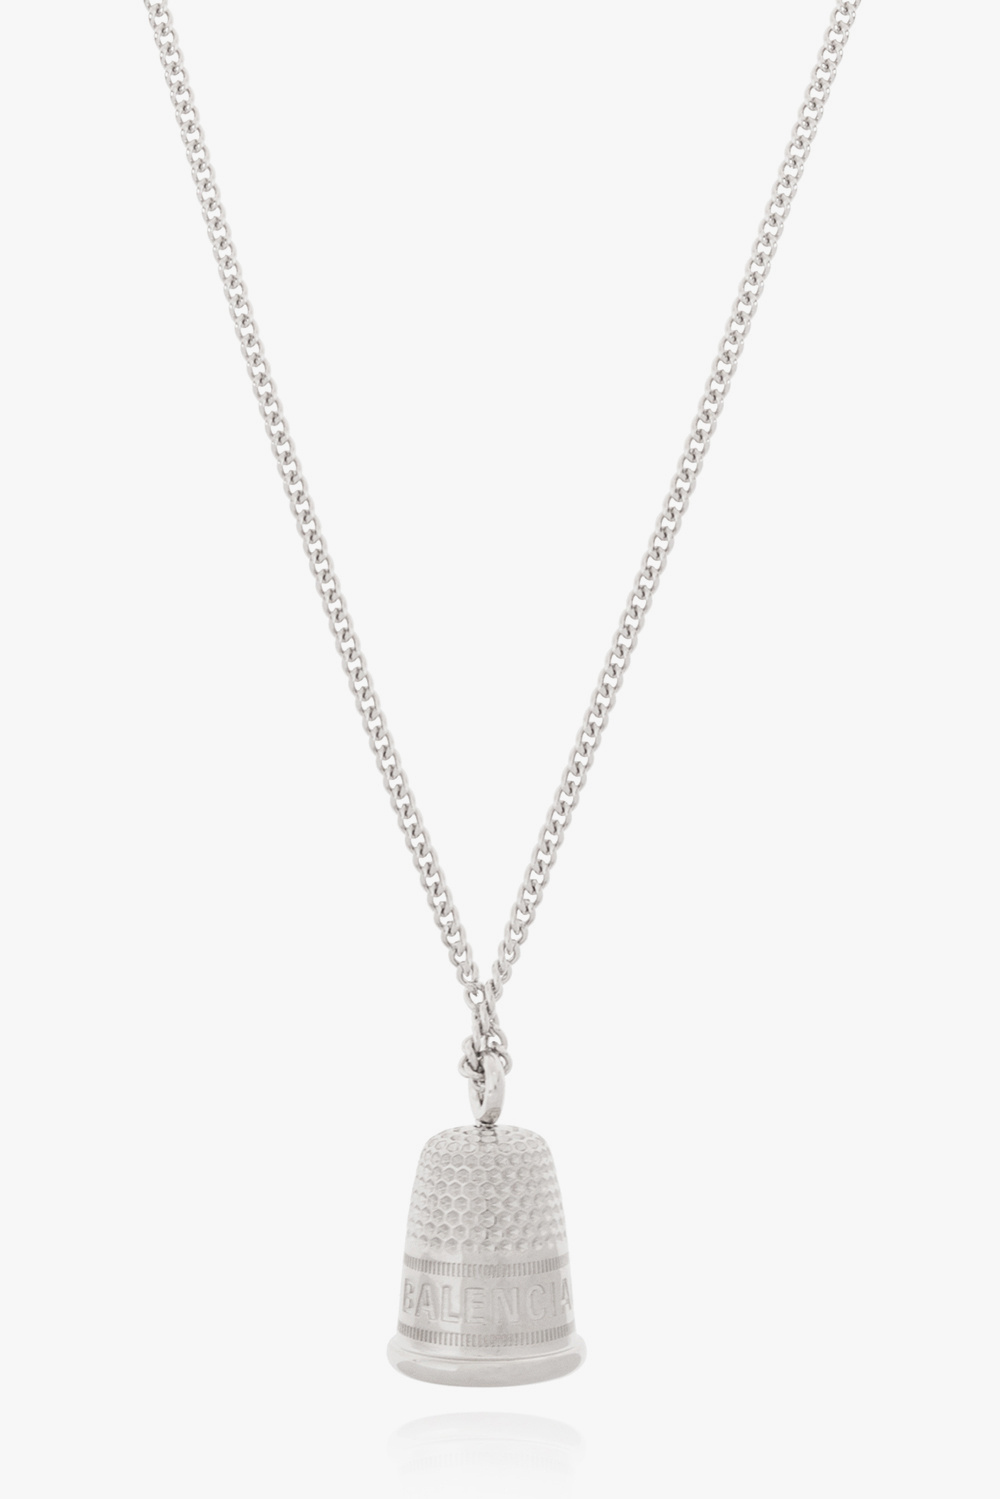 Balenciaga Necklace with thimble charm